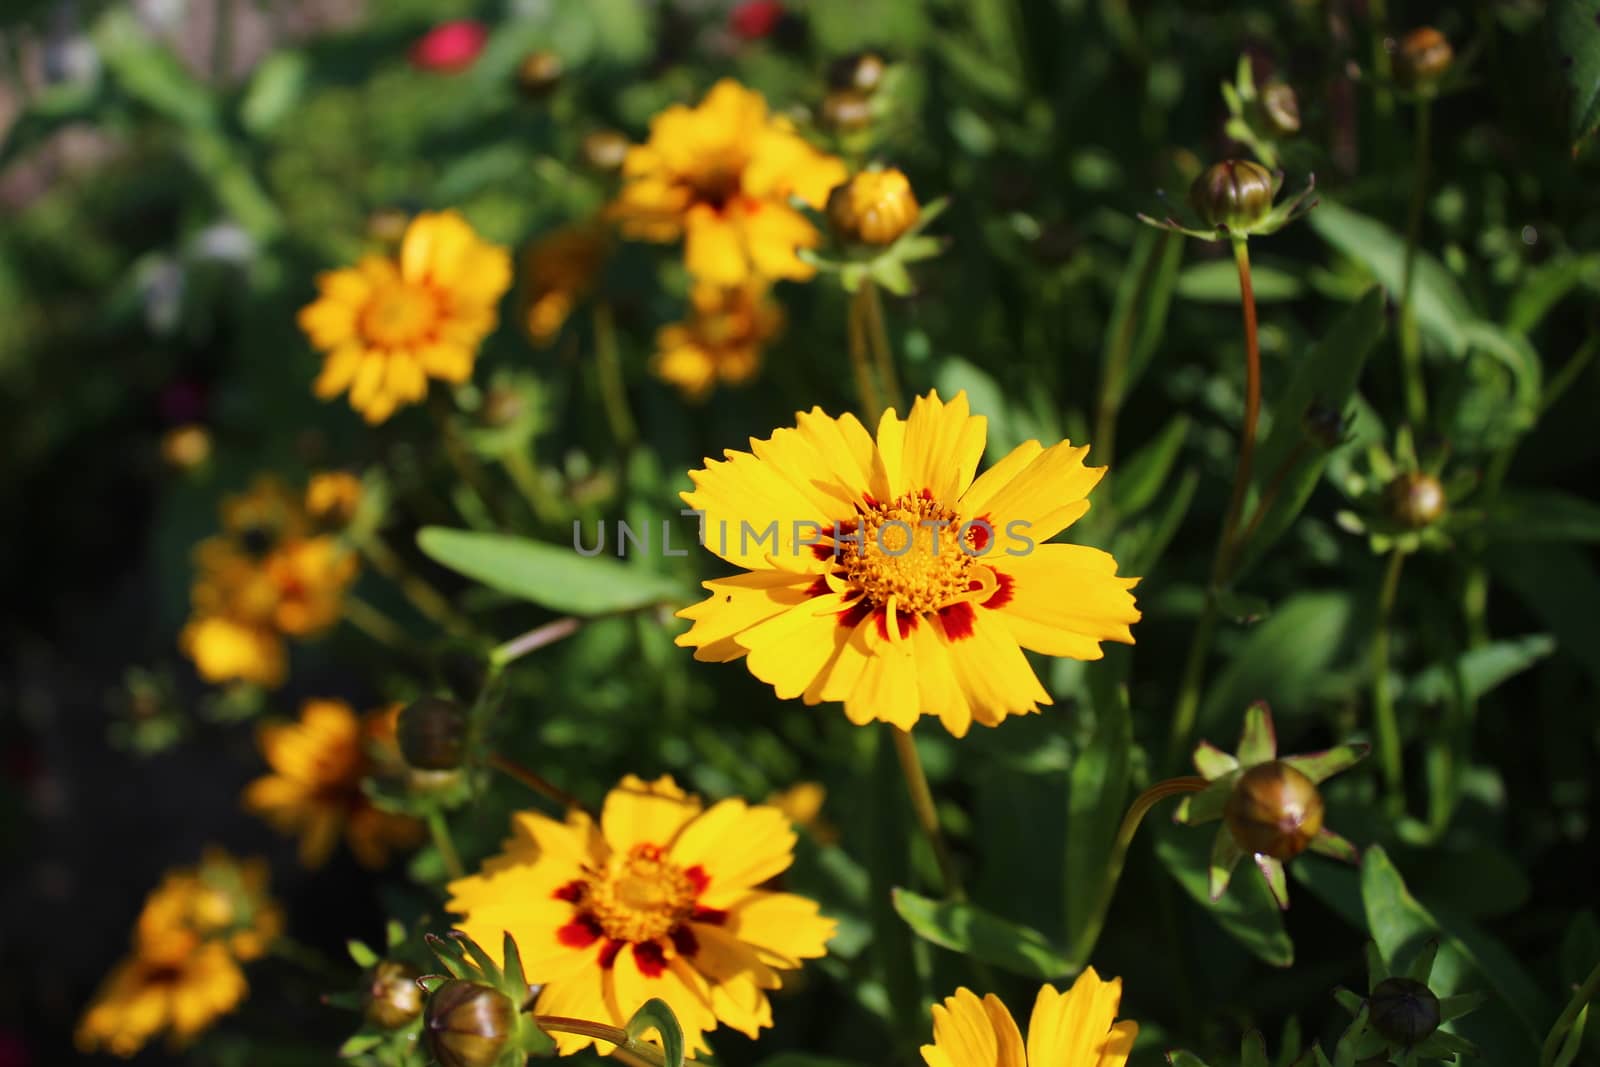 blossoming tickseed in the garden by martina_unbehauen